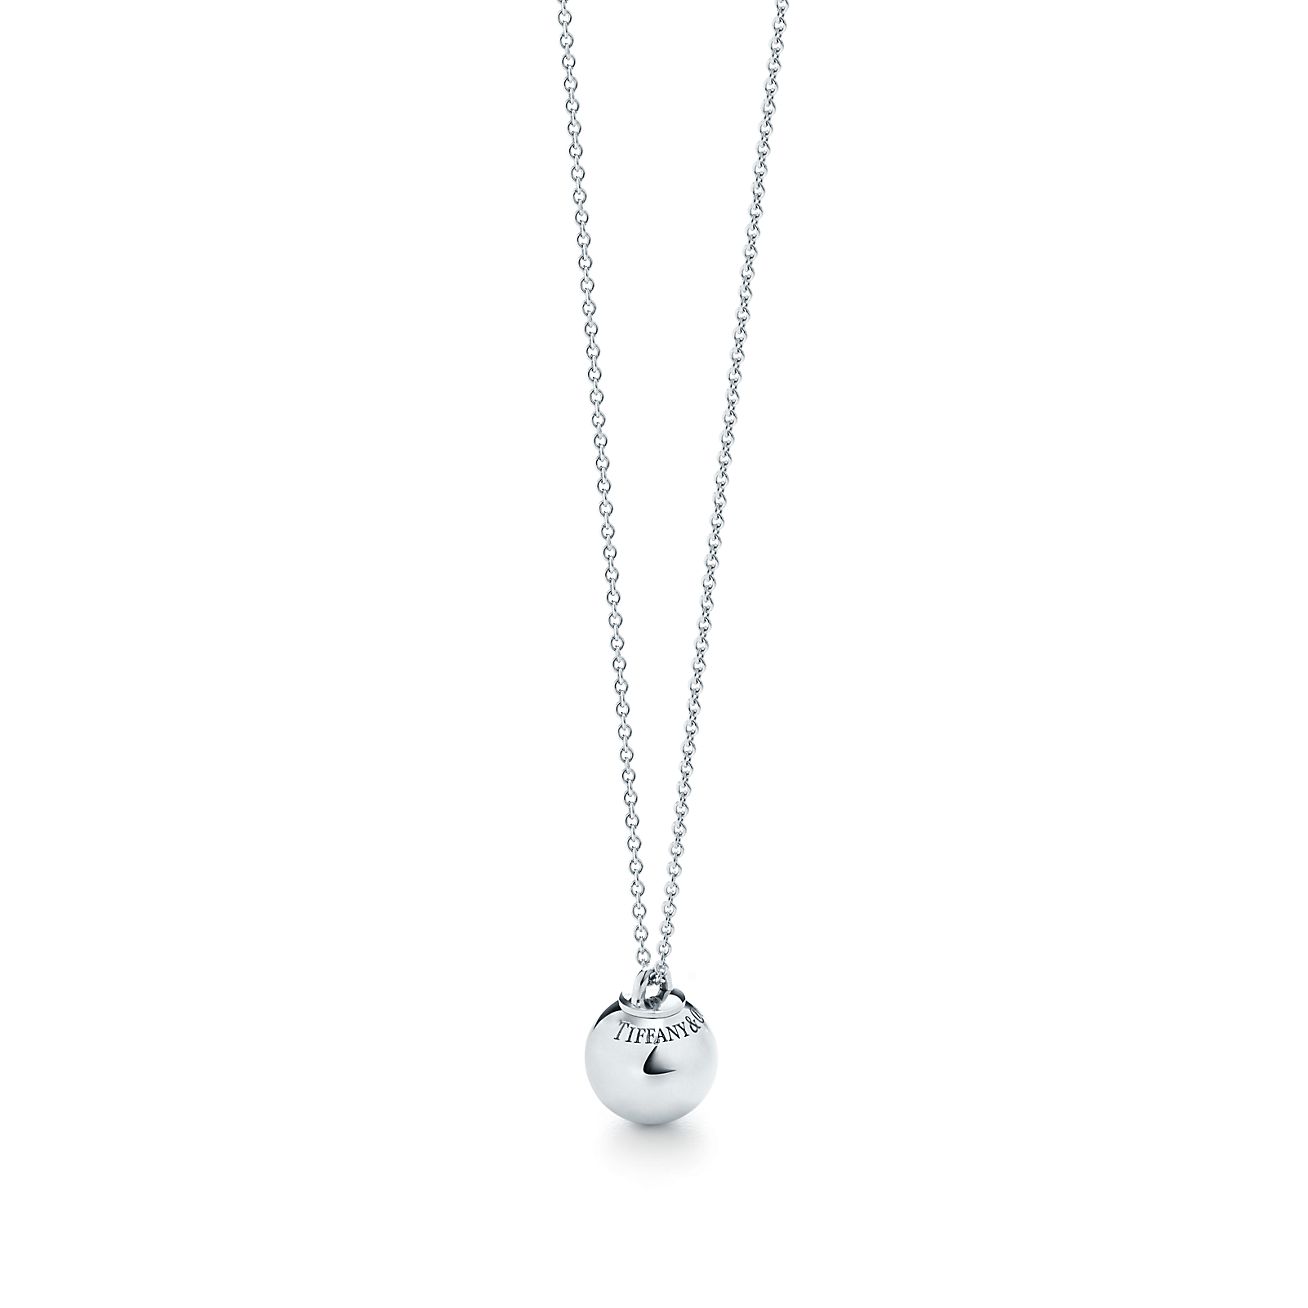 tiffany silver necklaces uk